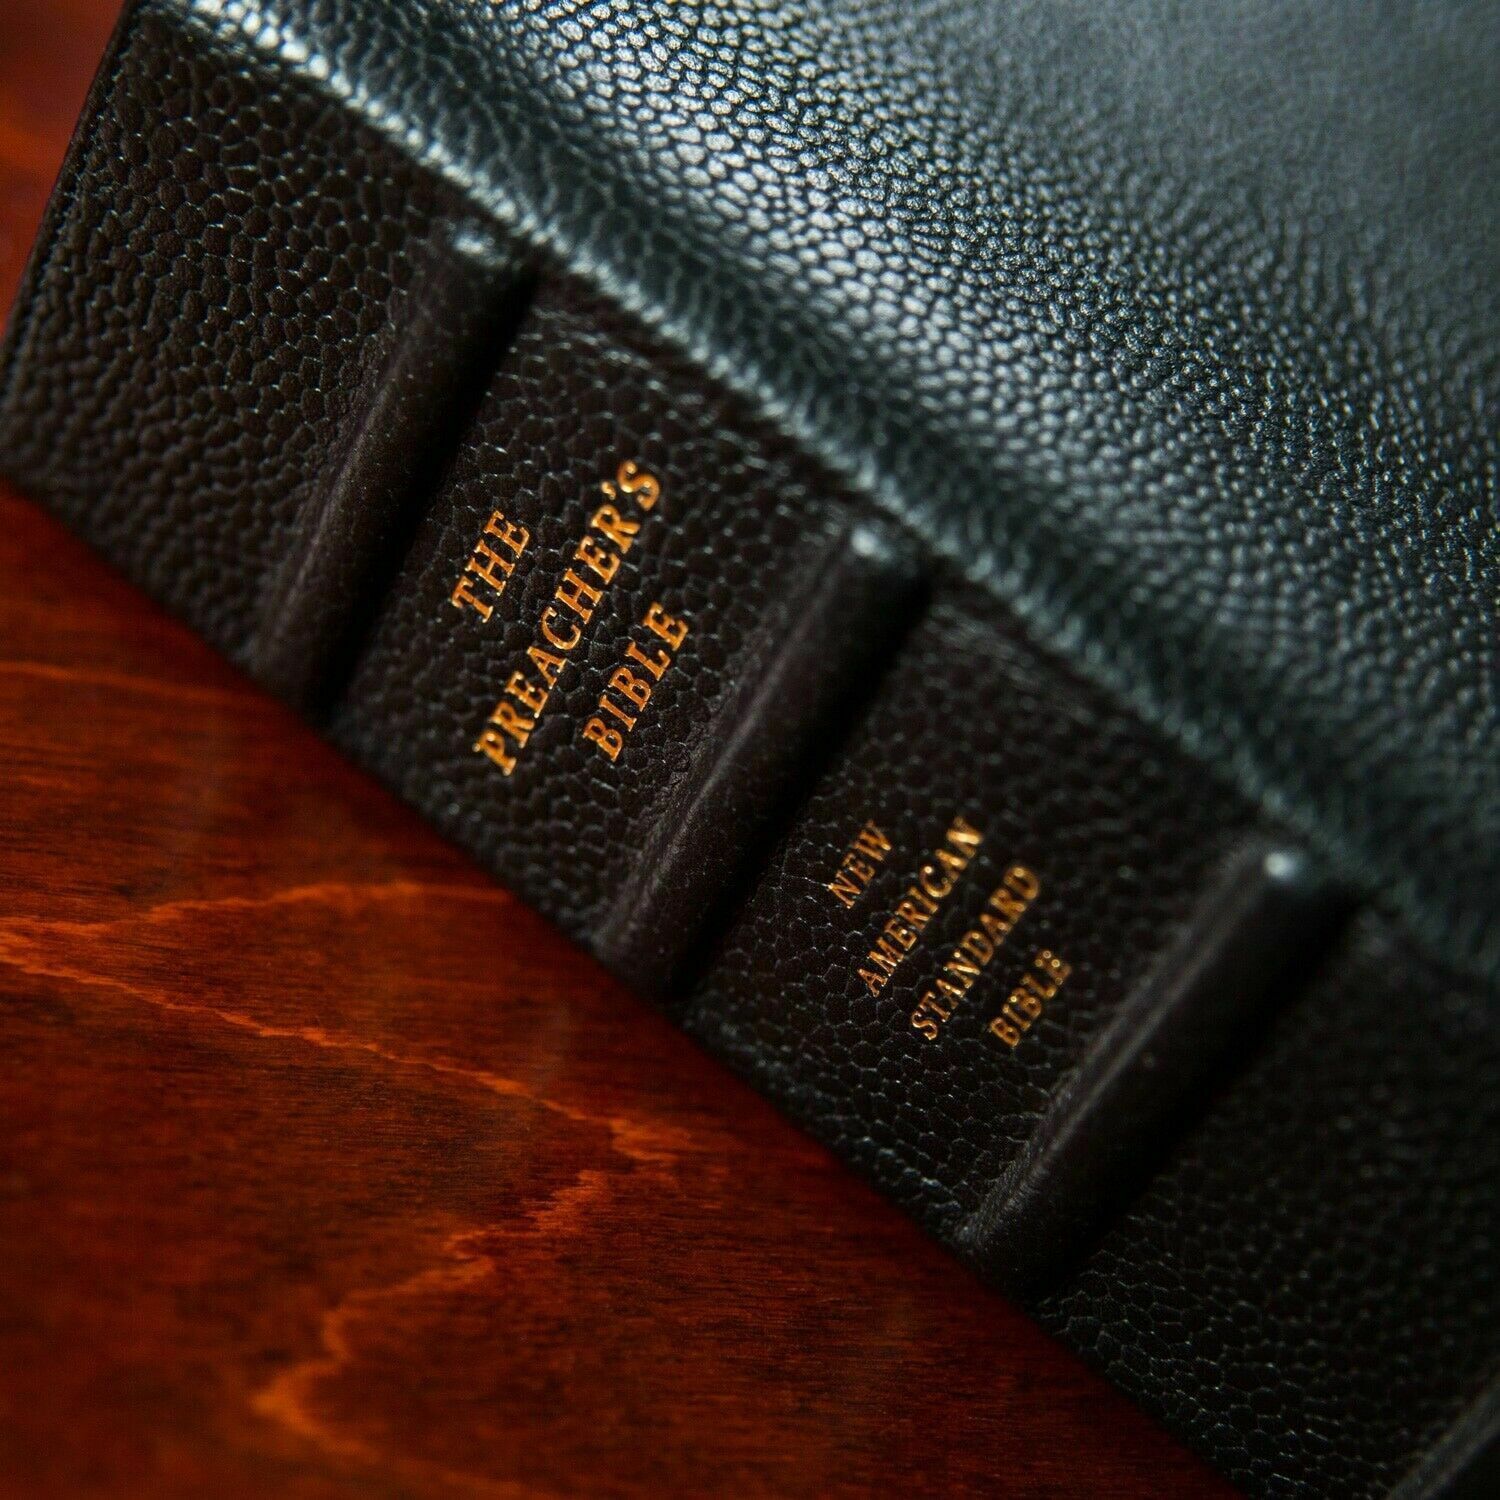 NEW - NASB Preacher's Bible (first edition) - Black goatskin leather